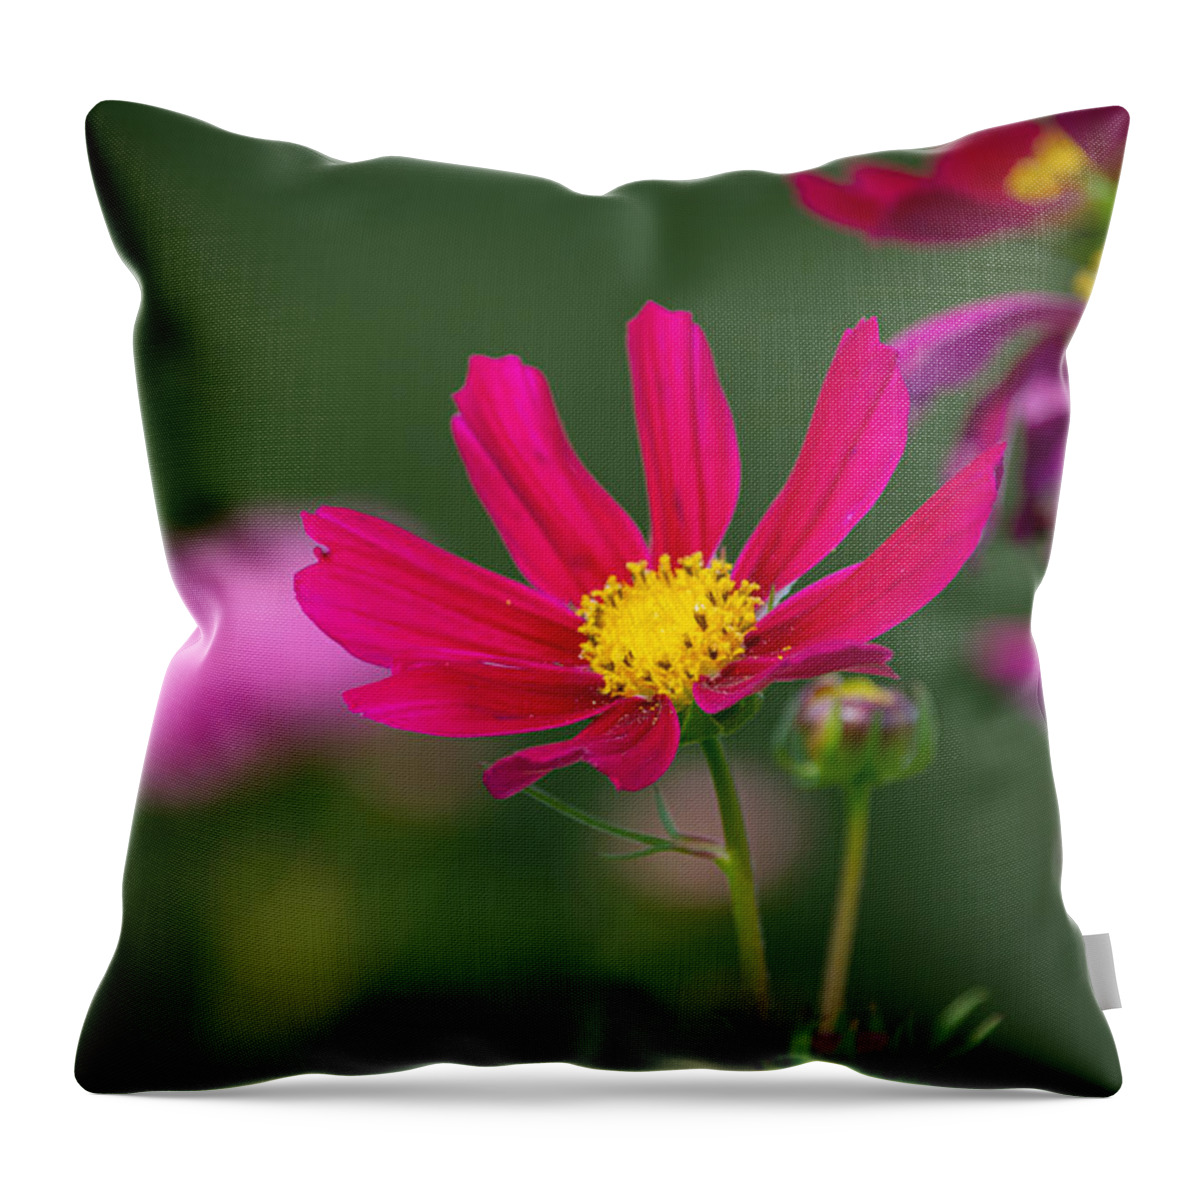 Flower Throw Pillow featuring the photograph Garden Pink by Linda Bonaccorsi